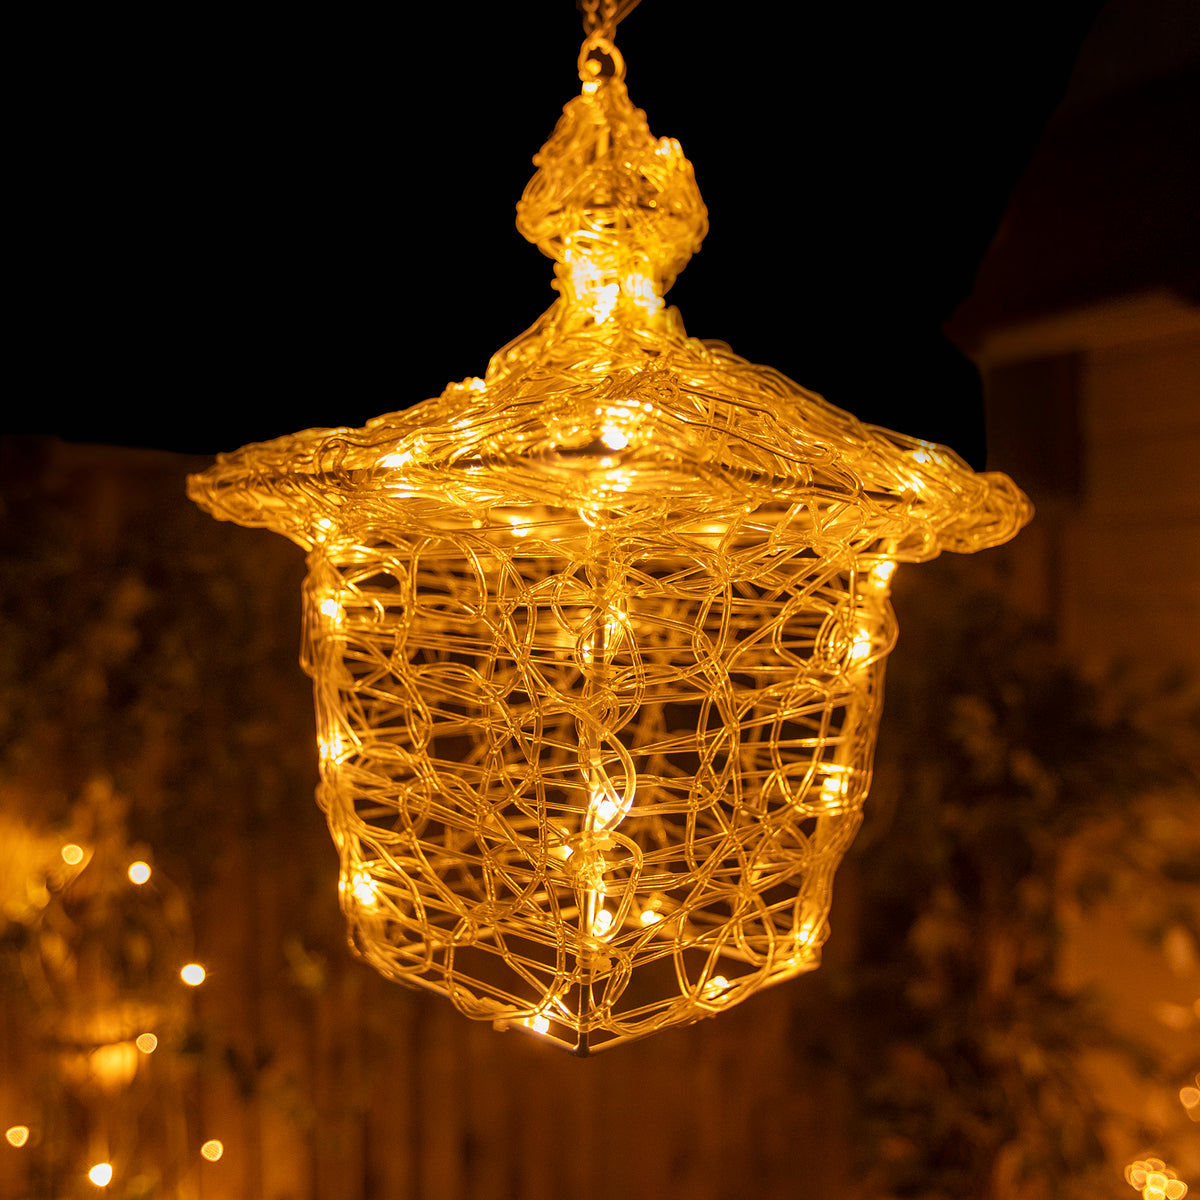 35CM Soft Acrylic Light Up Christmas Hanging Lantern with 40 White/Warm White Twinkling LEDs